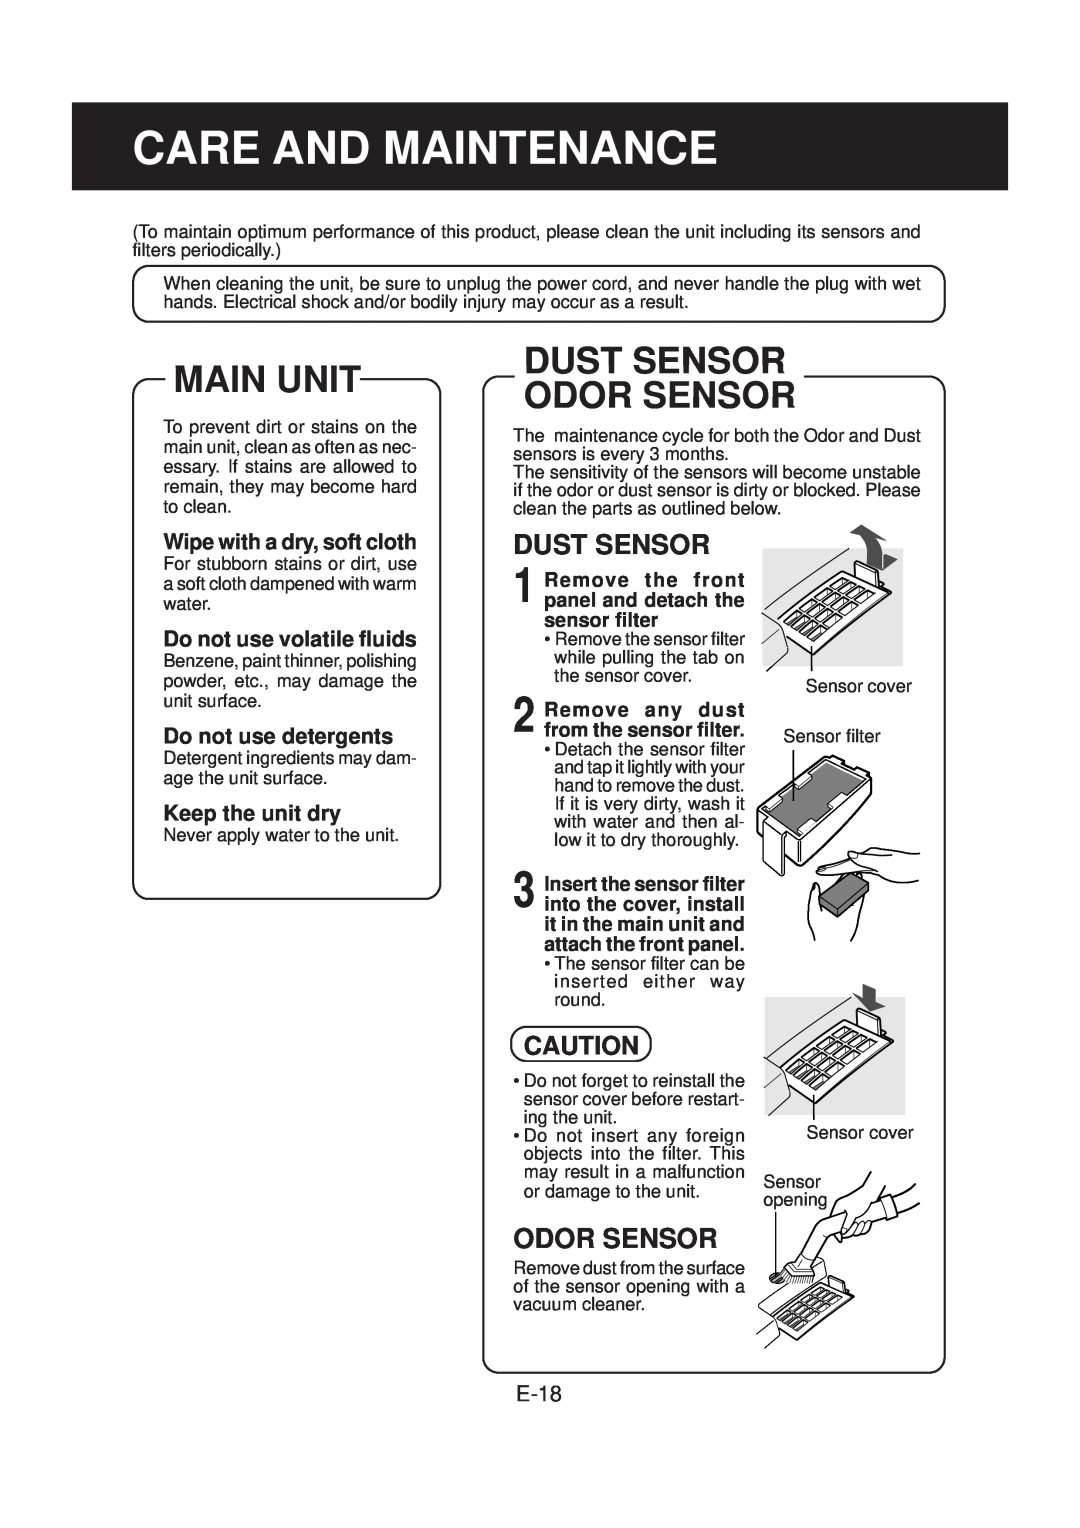 Sharp FP-N60CX operation manual Main Unit, Dust Sensor Odor Sensor, Care And Maintenance, E-18 